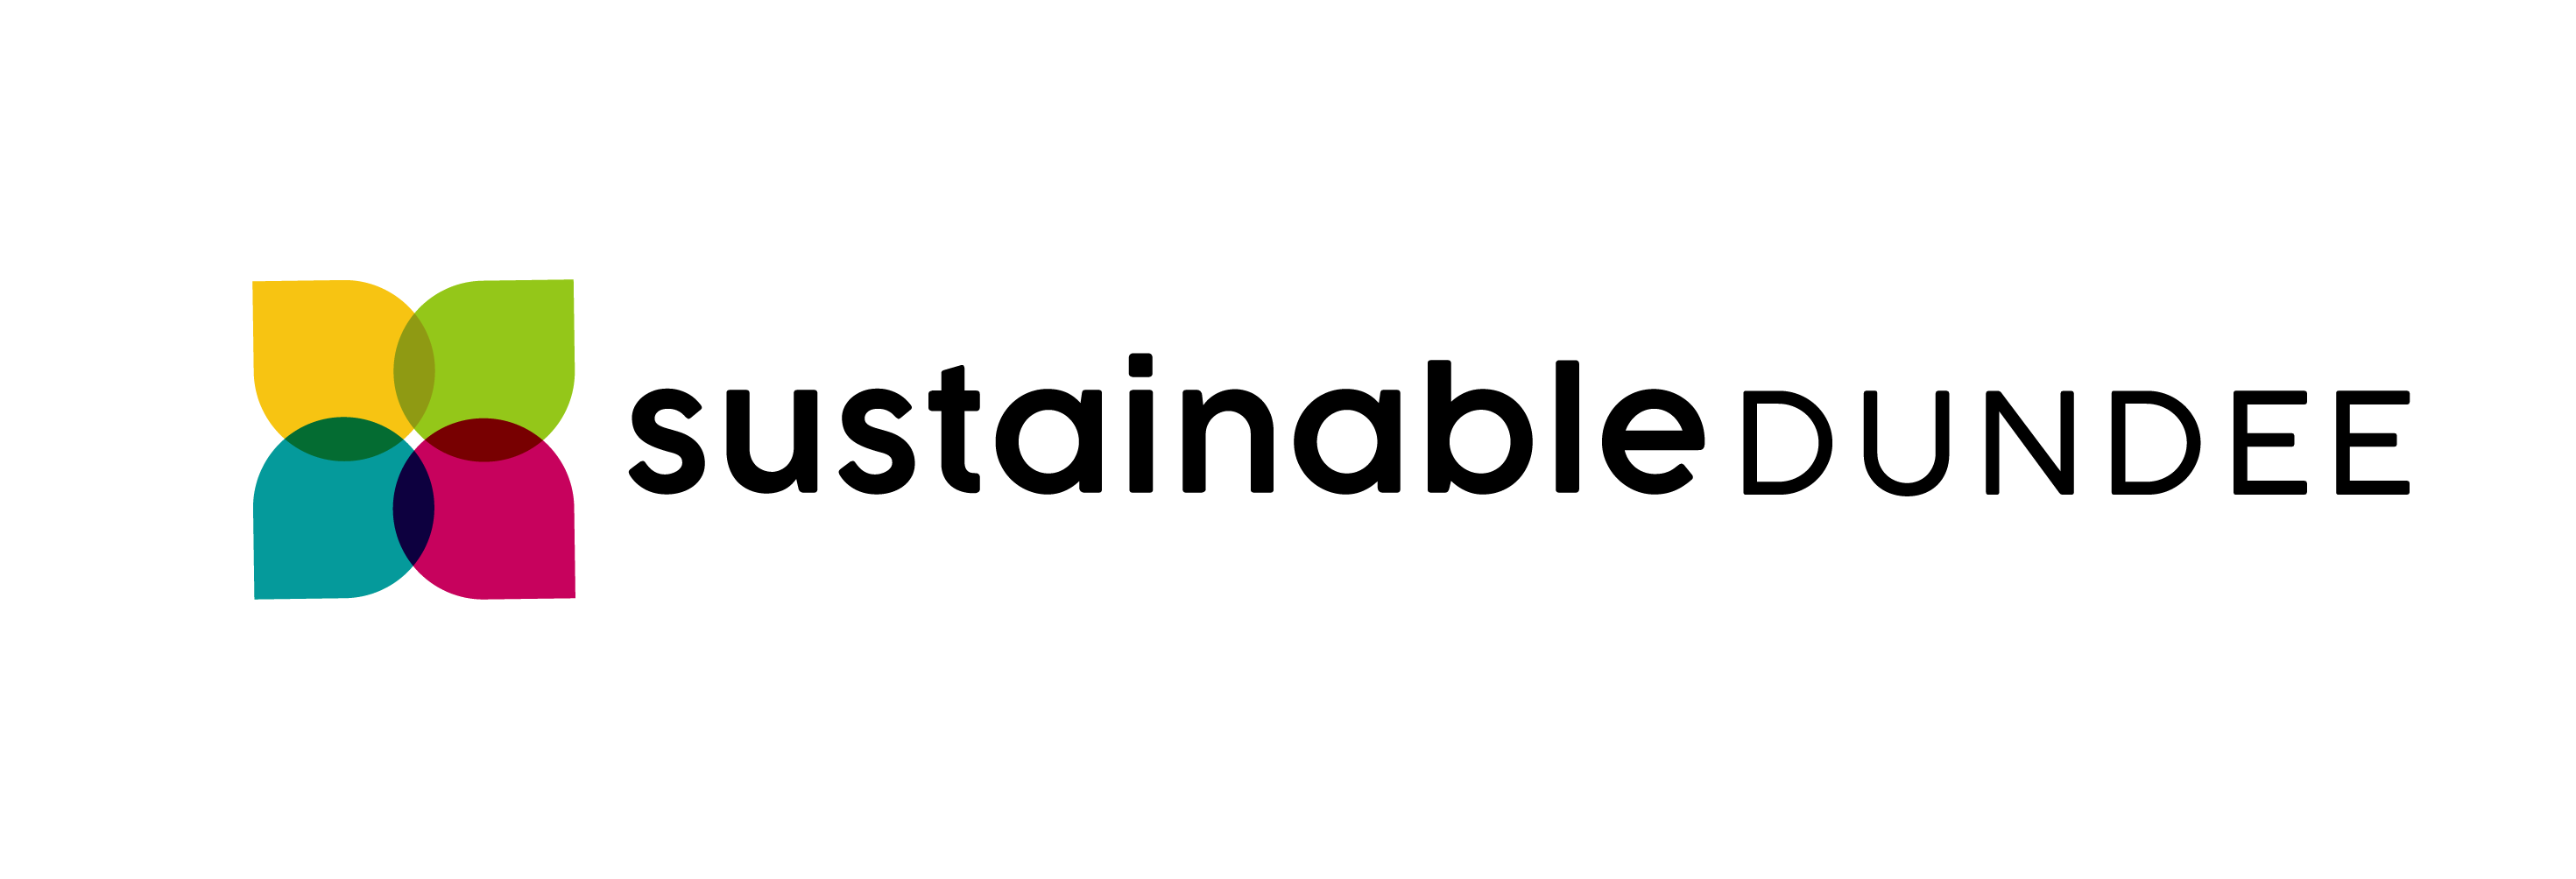 Sustainable Dundee logo